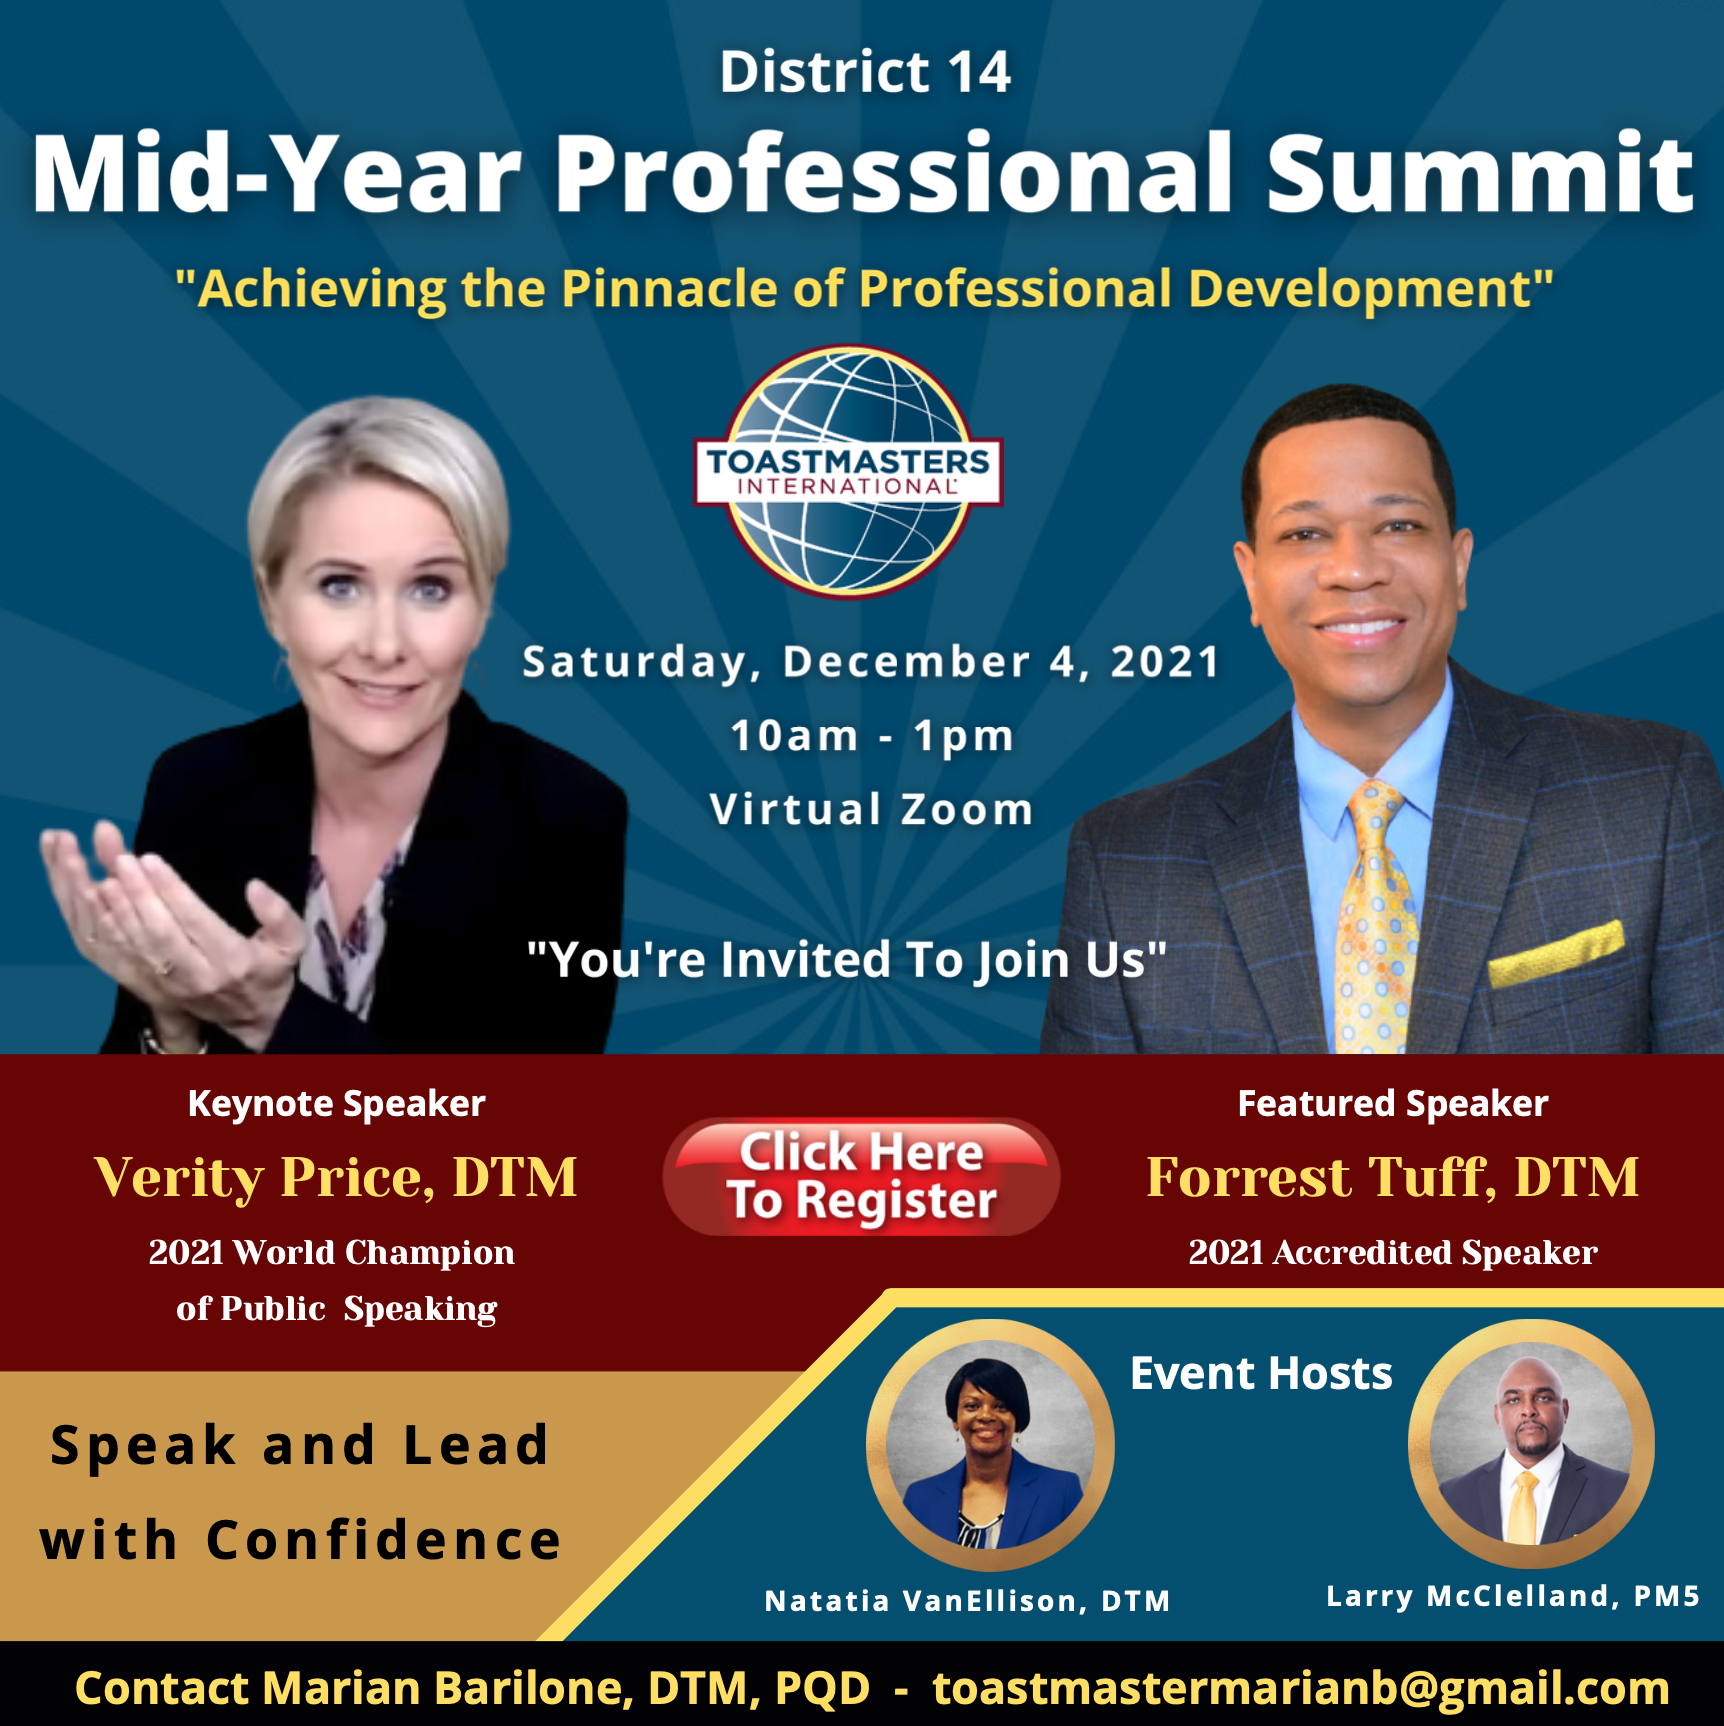 District 14 Mid-Year Professional Summit 2021